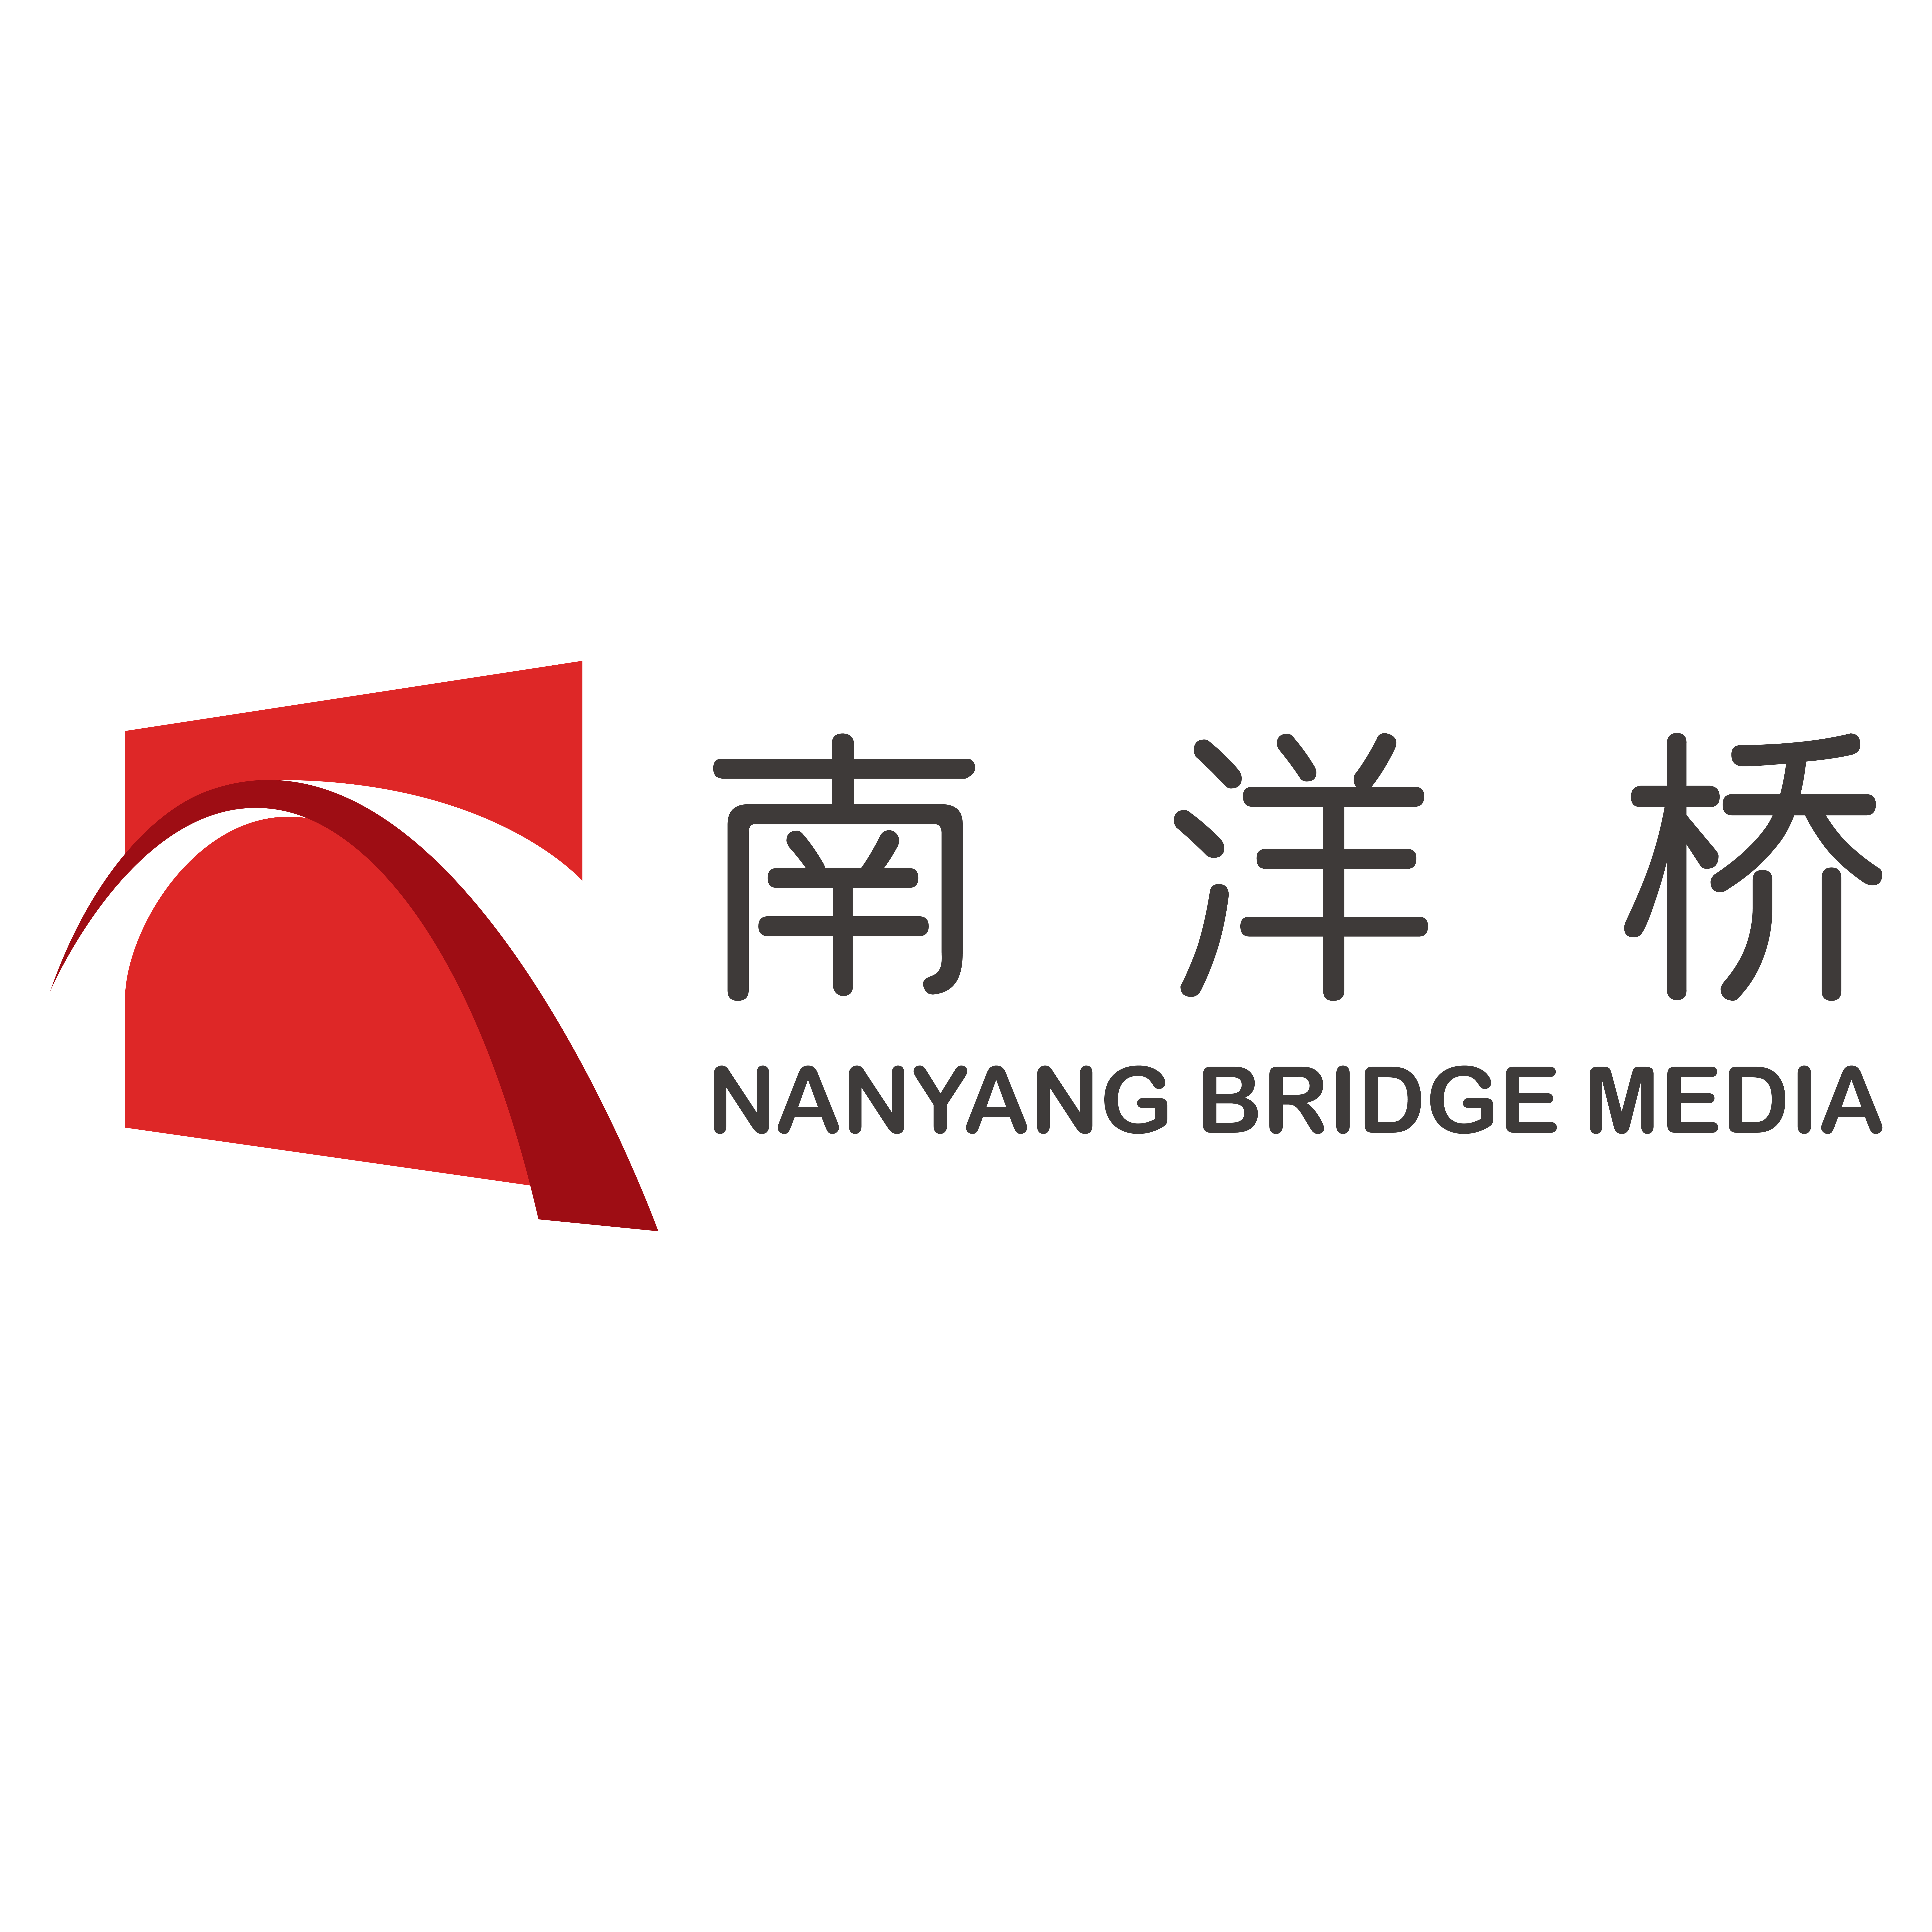 Nanyang Bridge Media profile on Qualified.One